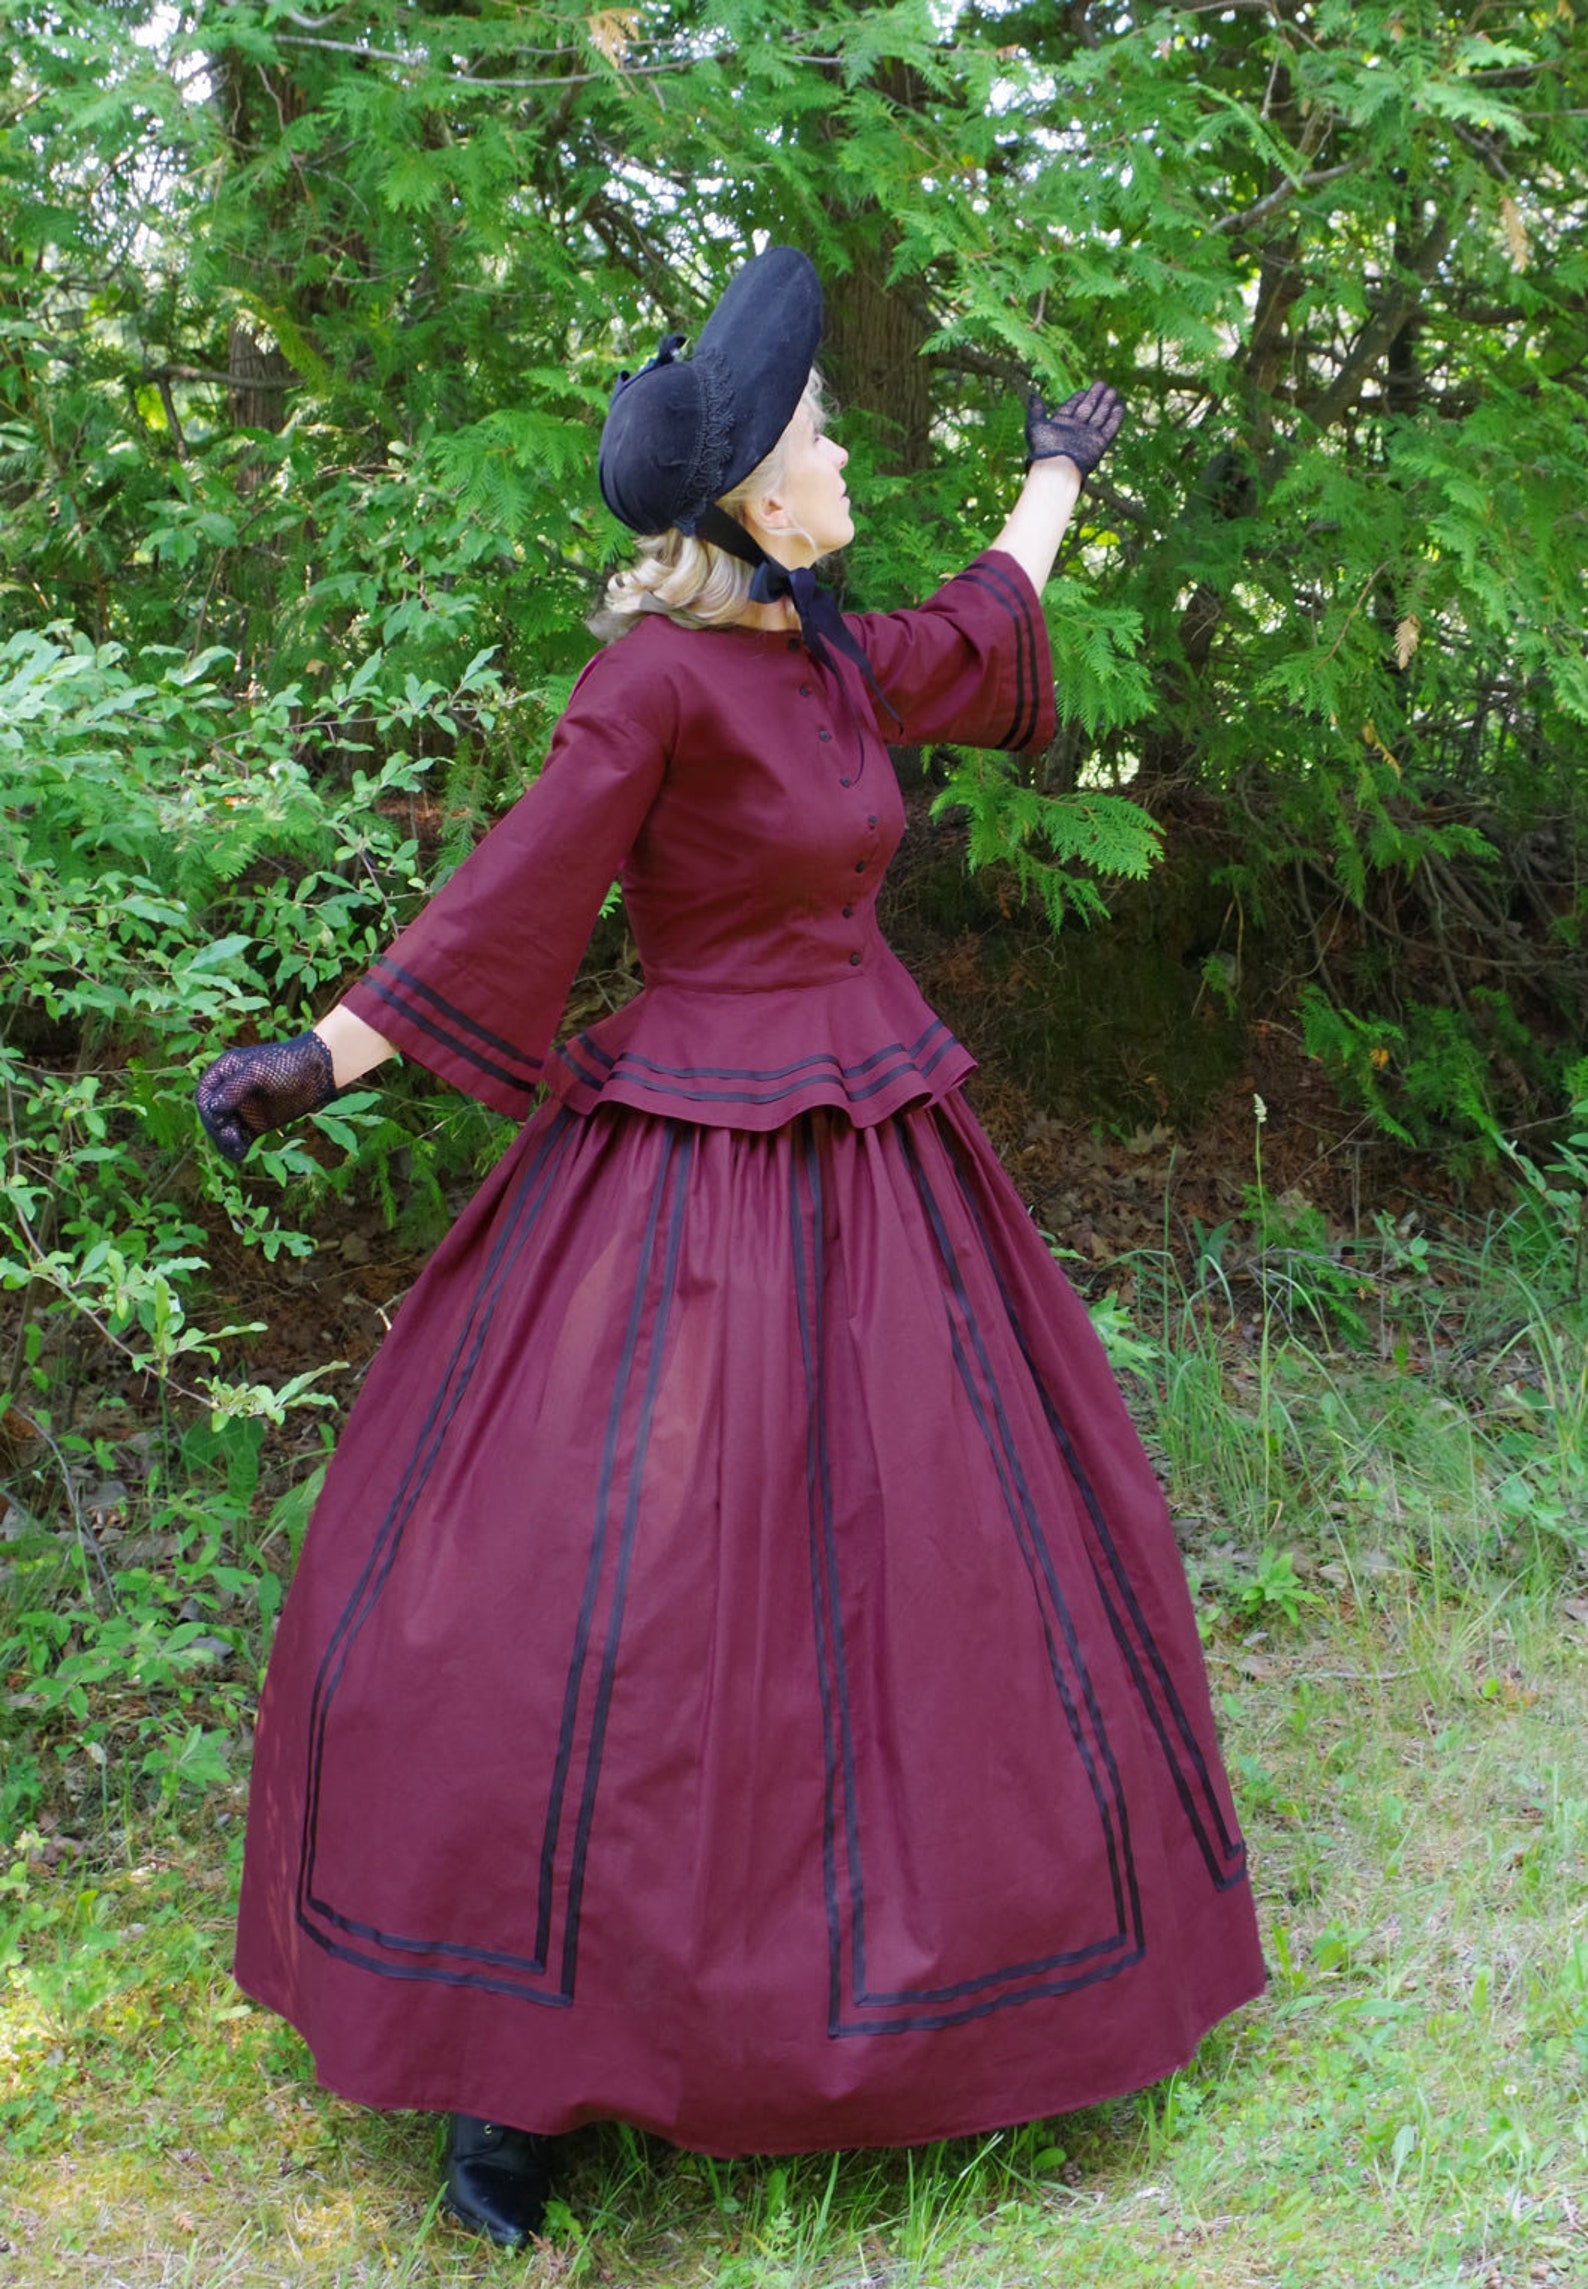 Mallory Victorian Civil War Dress - Etsy